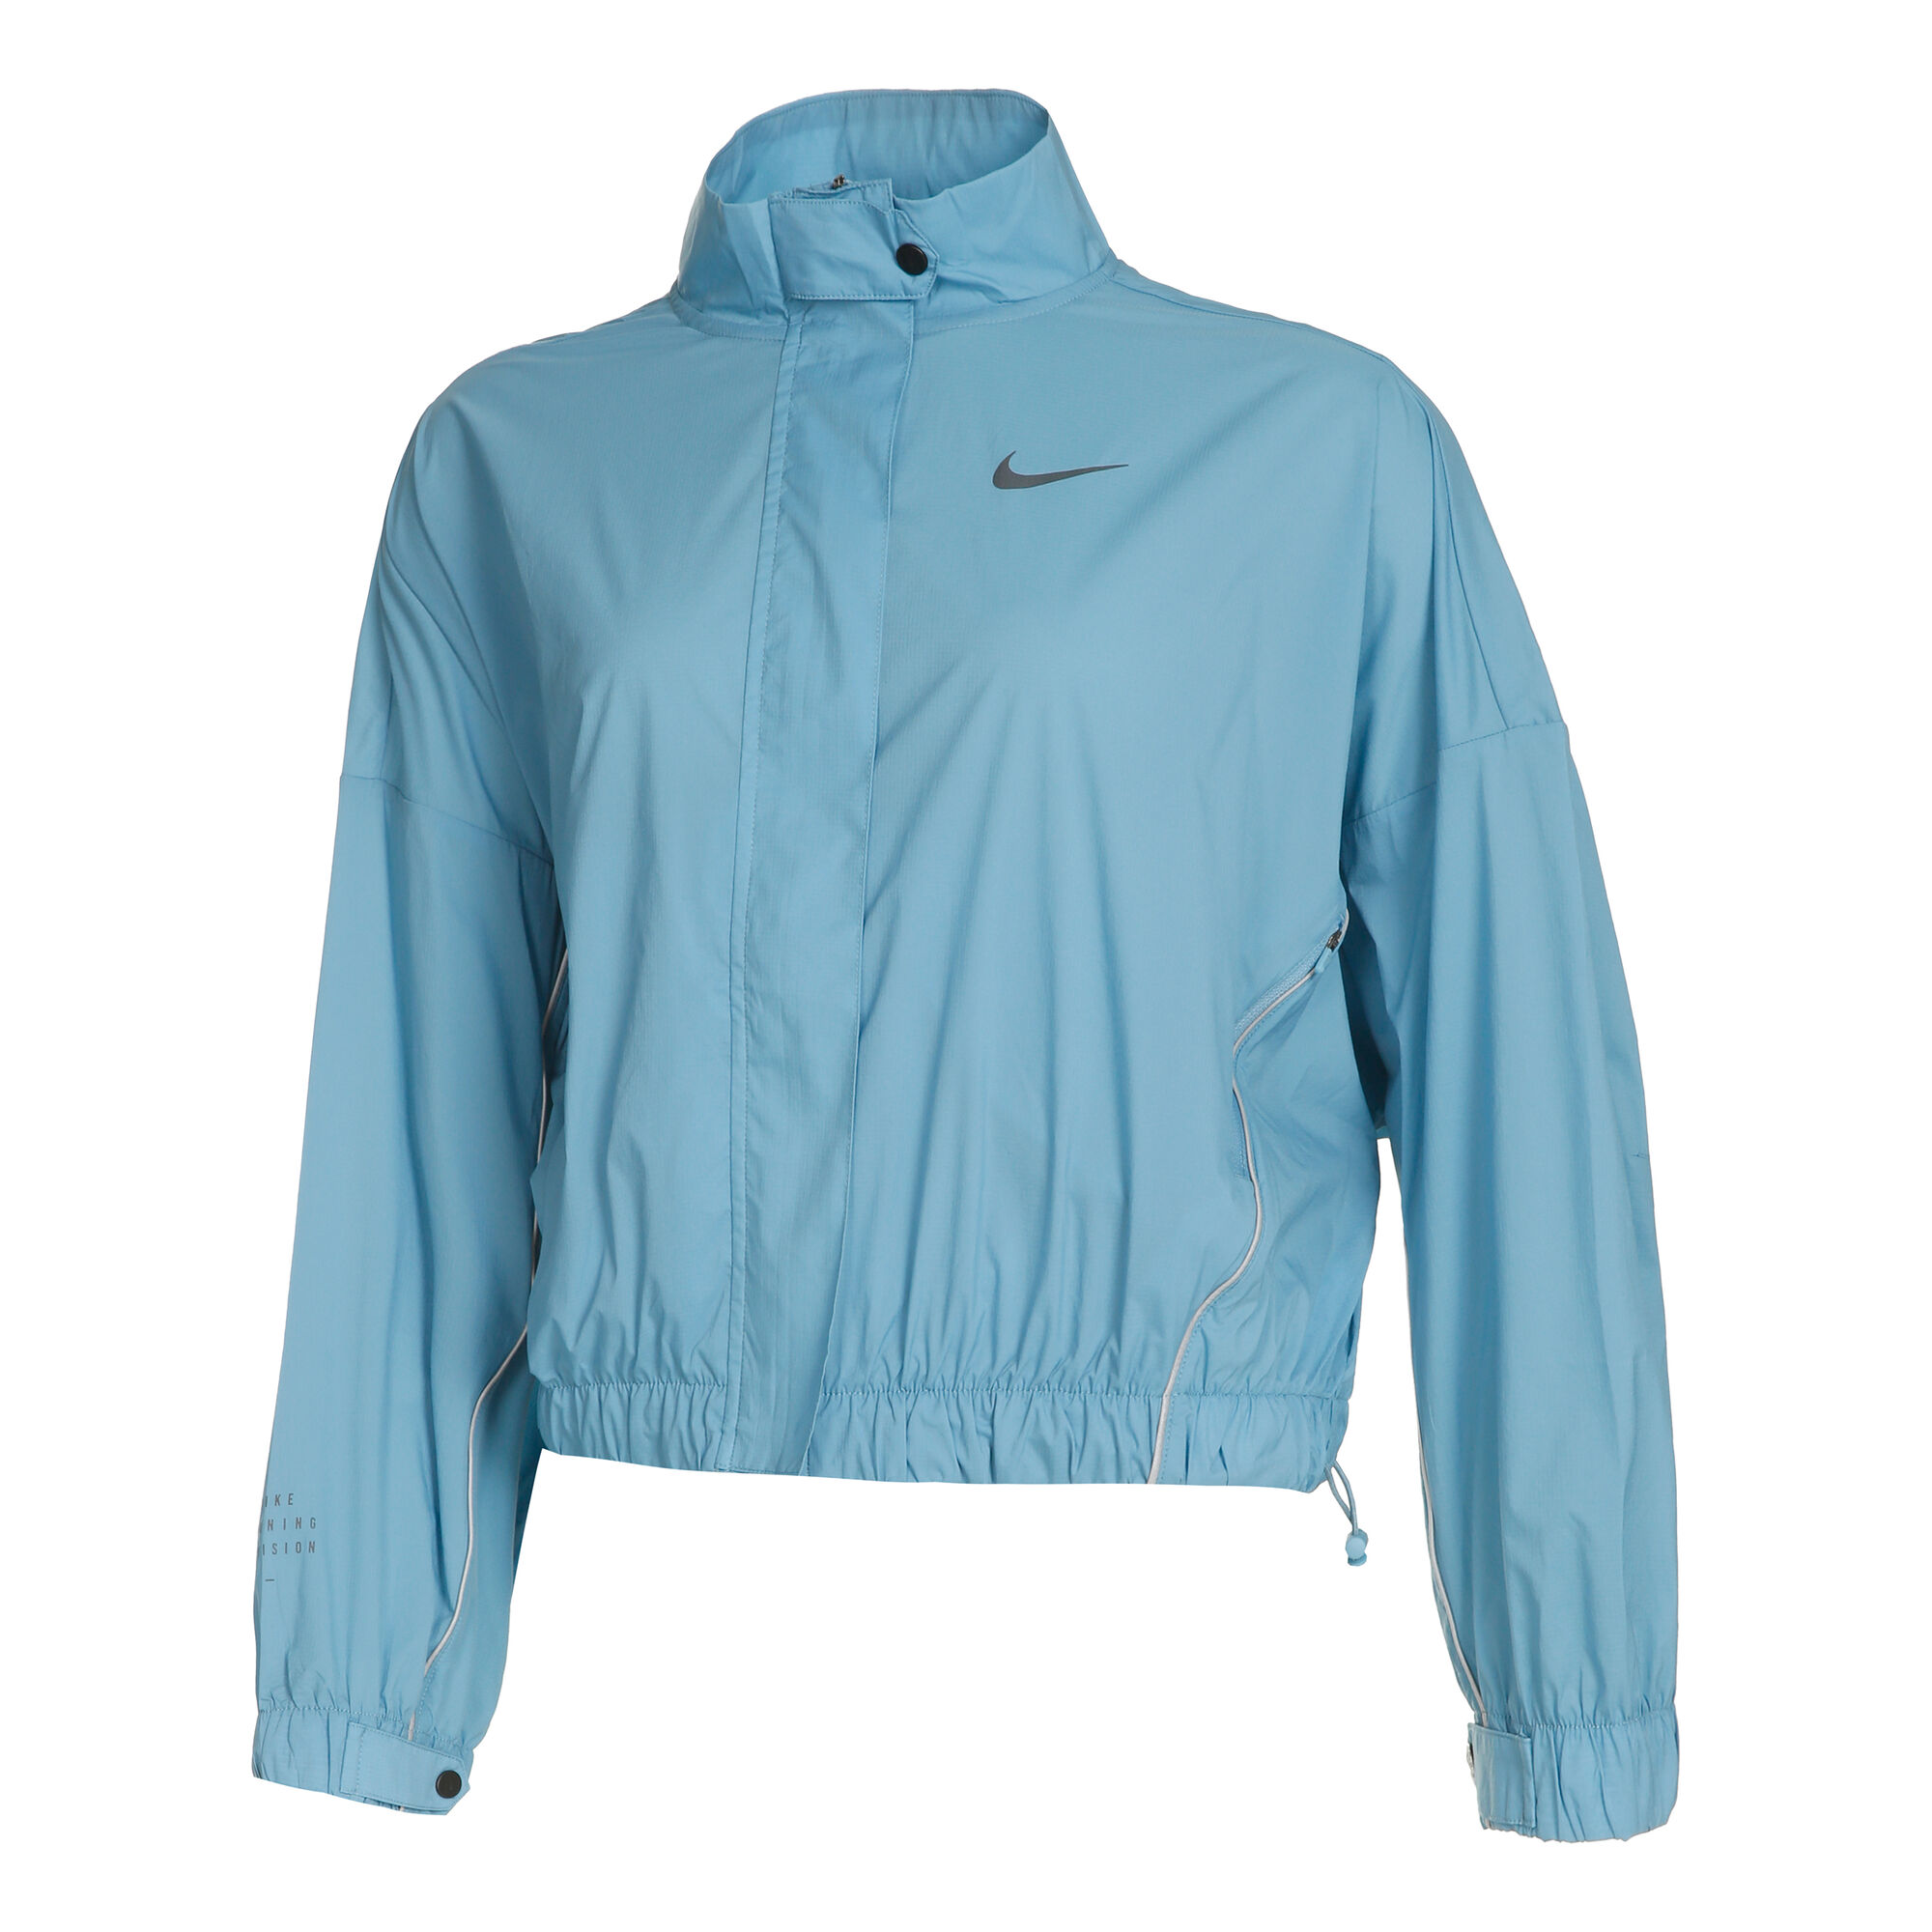 Buy Nike Division Running Jacket Women Blue, Black online